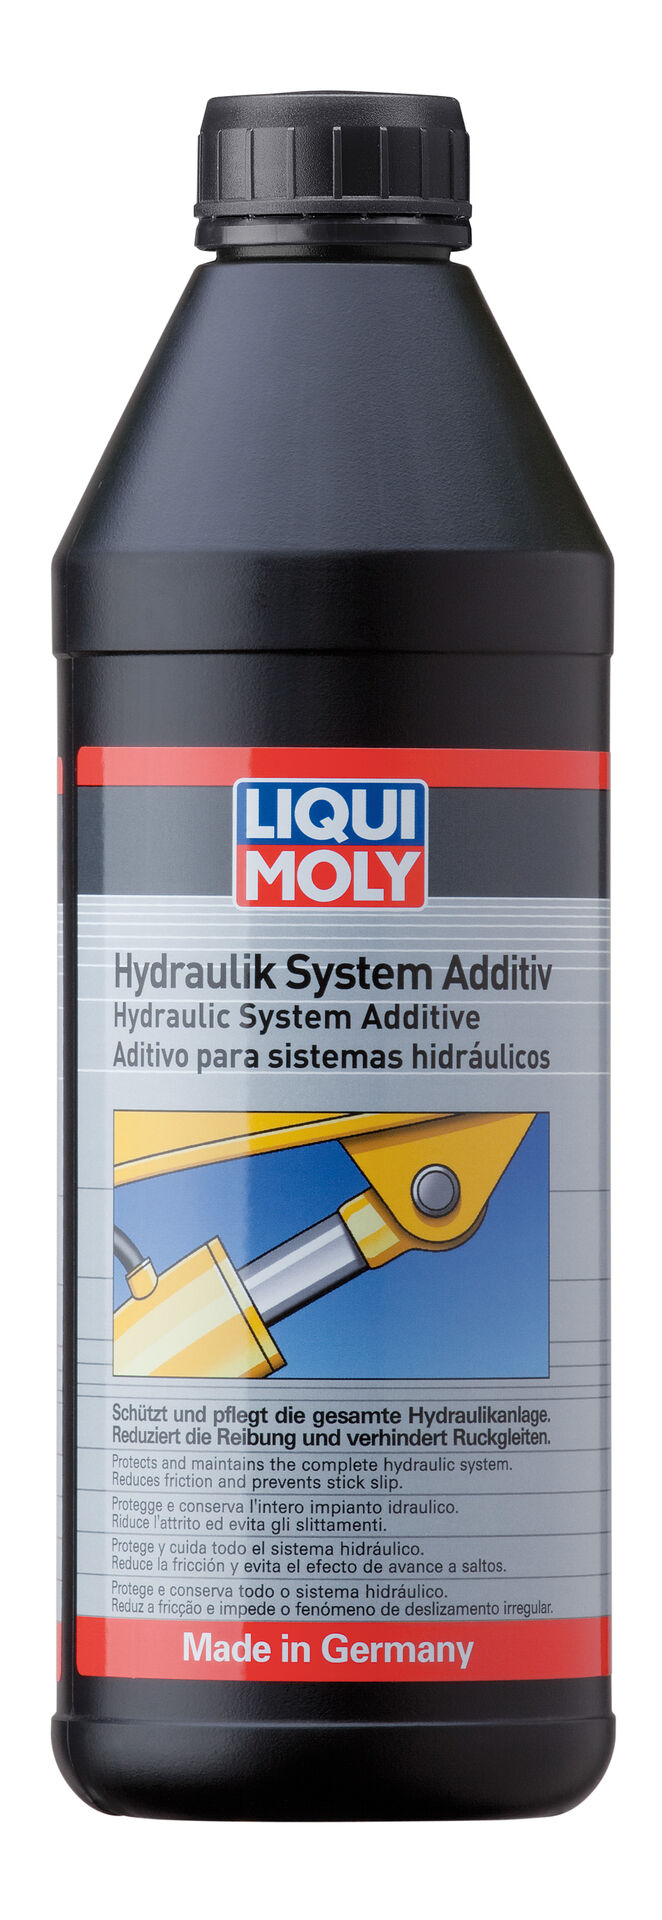 1 Liter LIQUI MOLY 5116 Hydraulik System Additiv Zusatz Getriebeöl Additiv